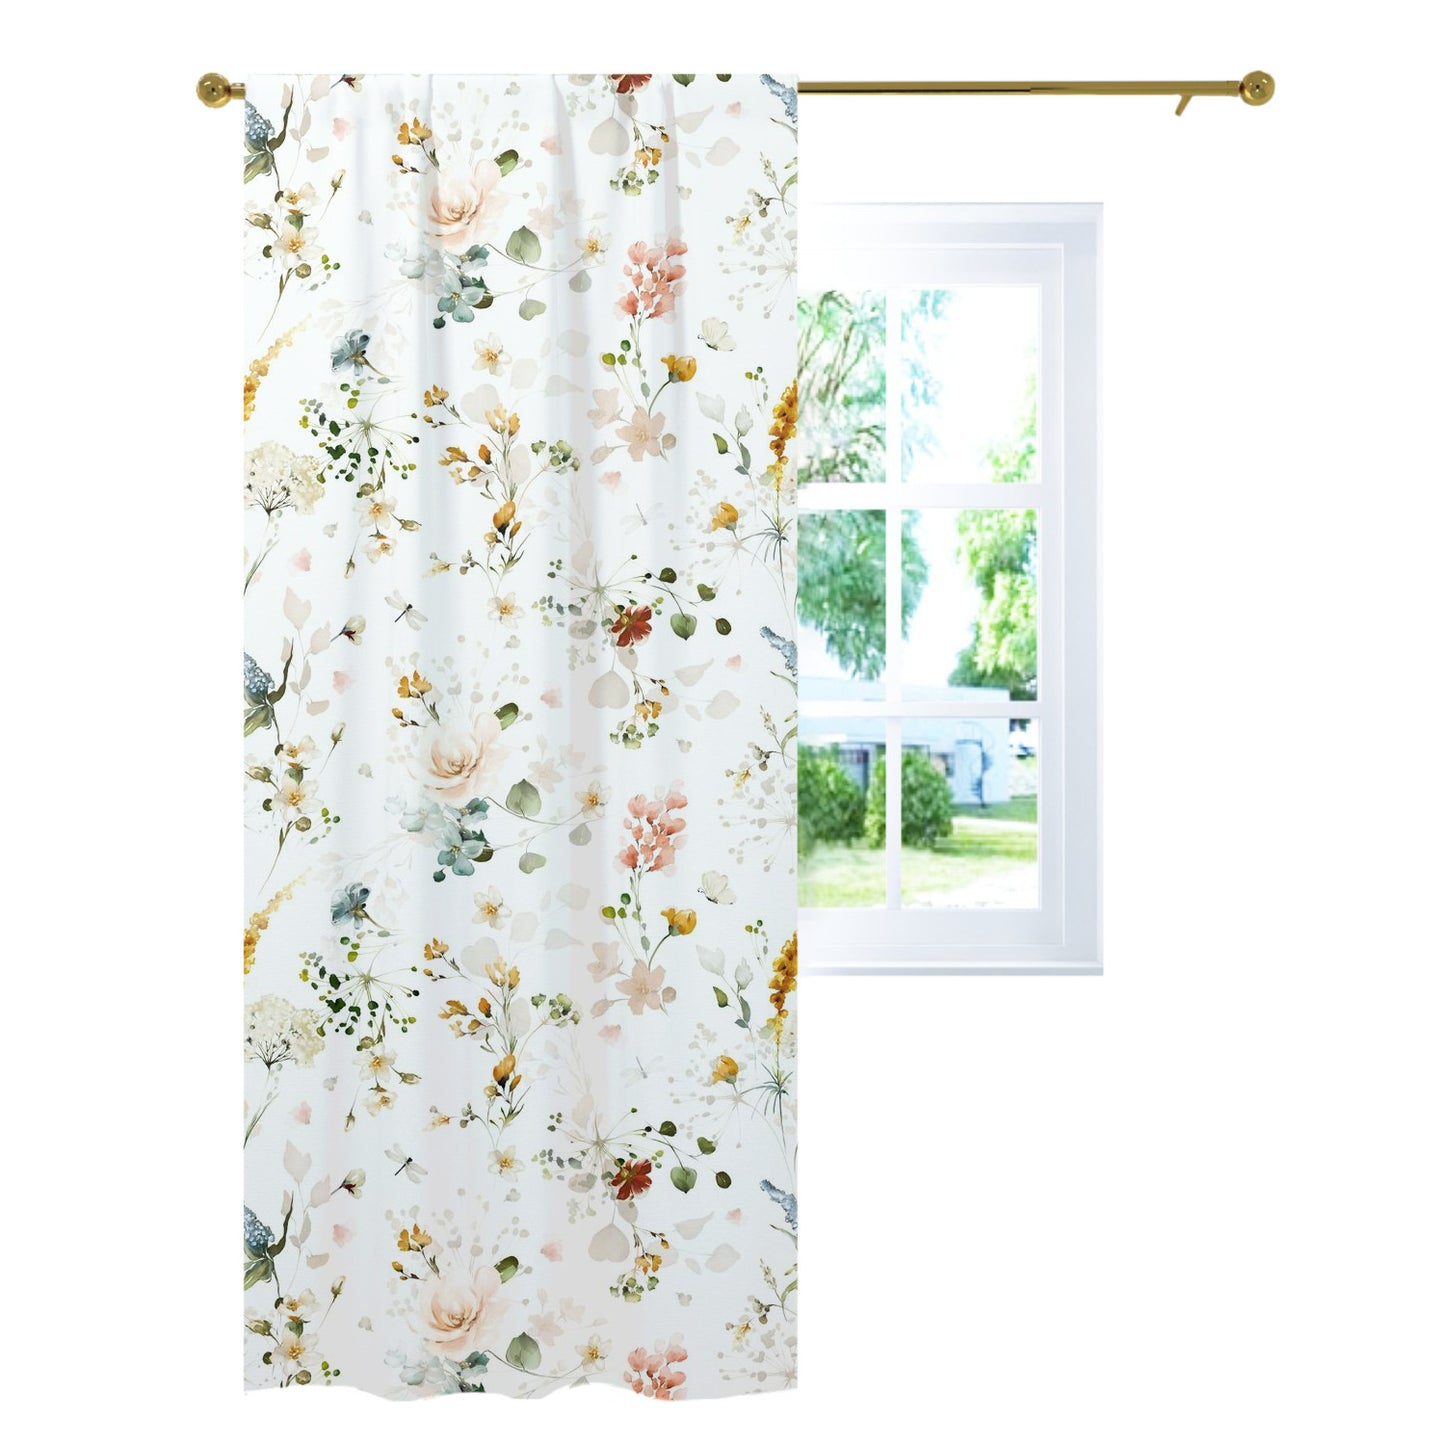 Wild flowers Curtain, Single Panel, Floral Nursery Decor - Vintage Garden